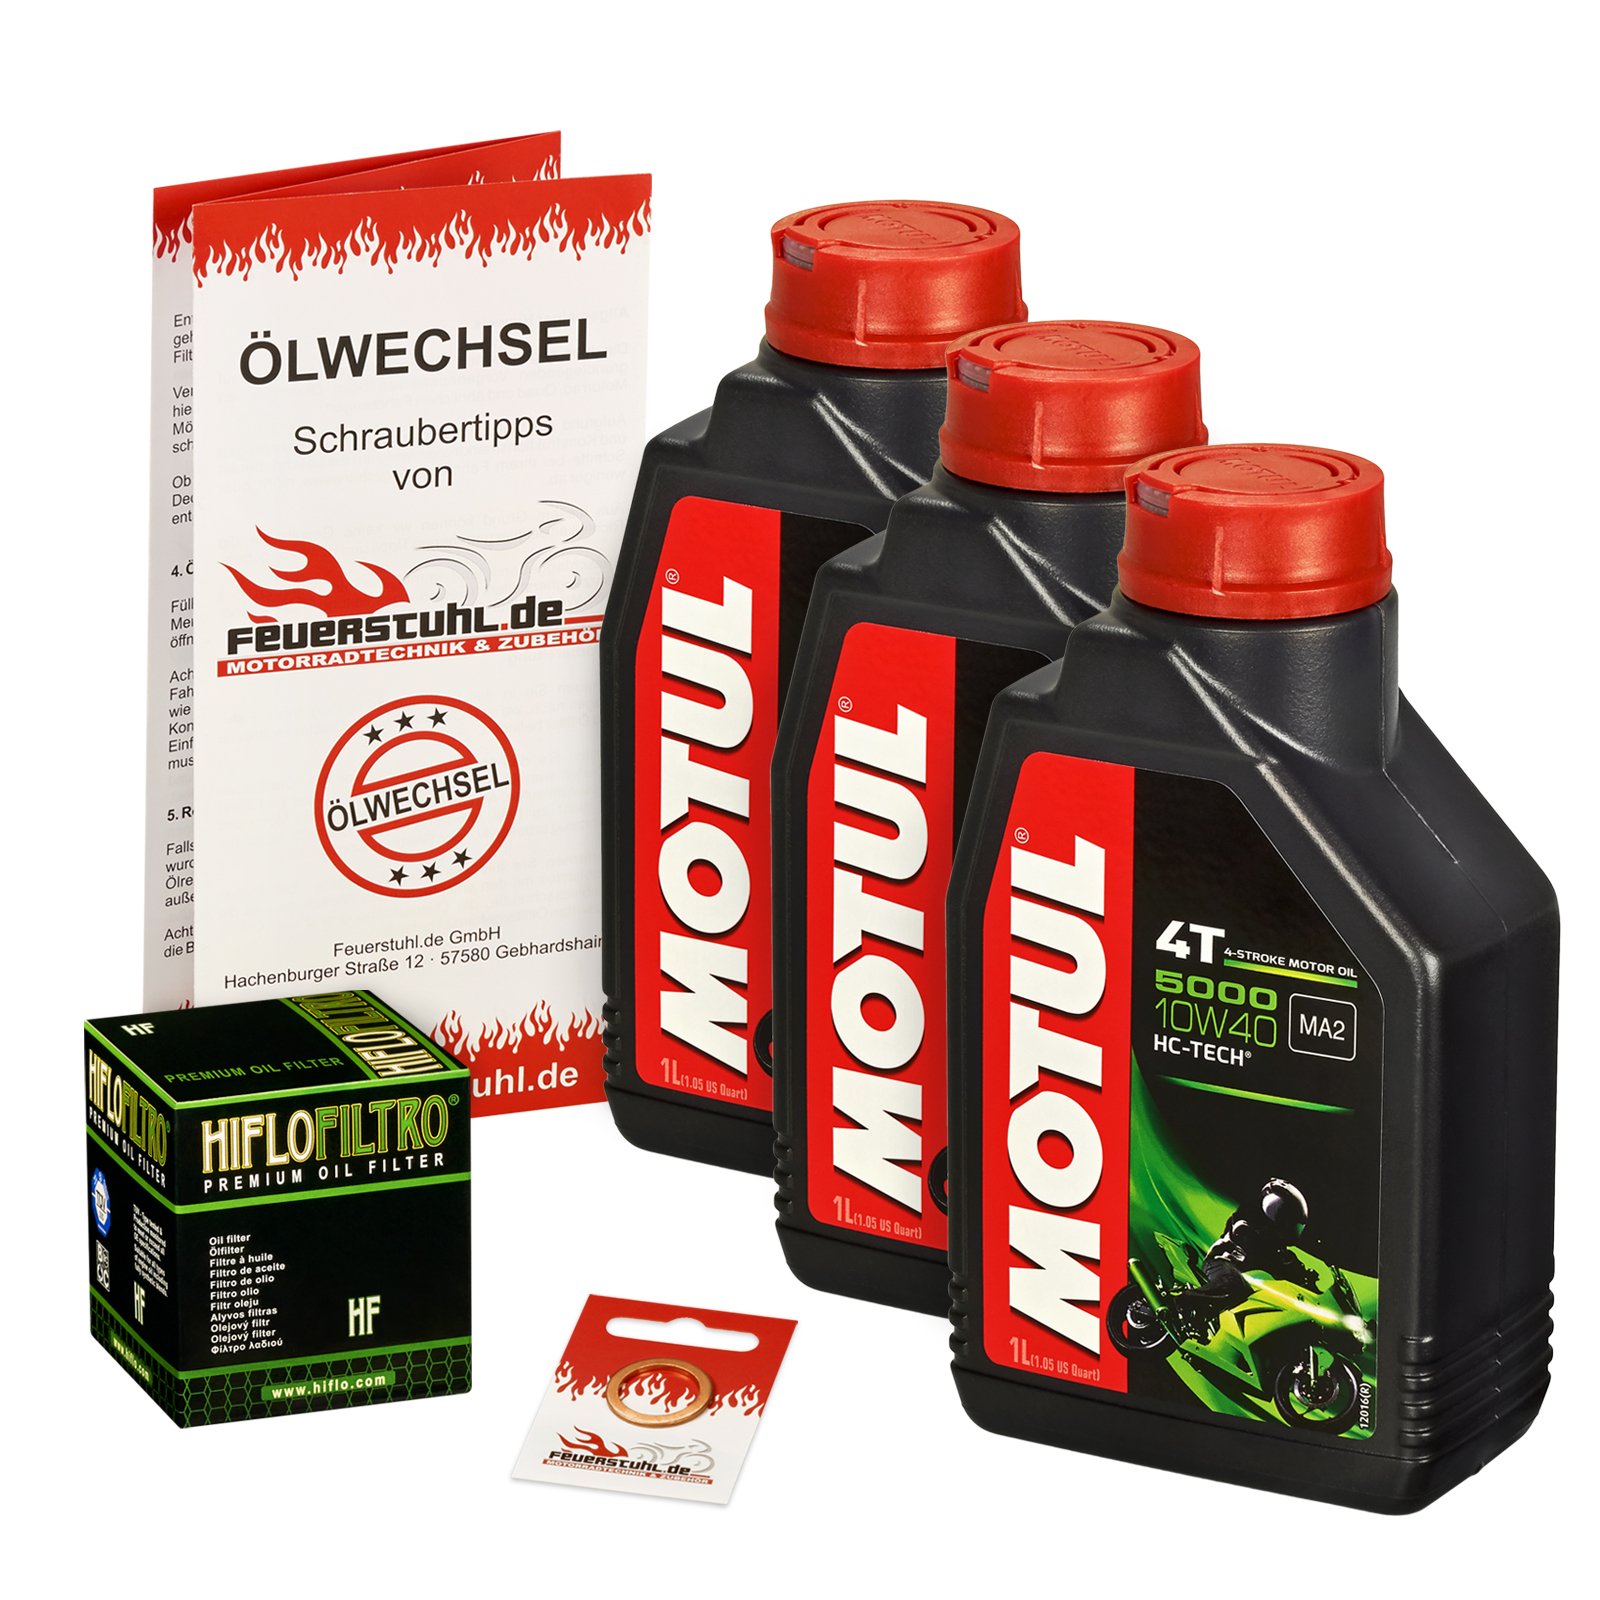 Motul 10W-40 Öl + HiFlo Ölfilter für Honda CX 500 /S/E, 77-83, CX500 PC01 PC06 - Ölwechselset inkl. Motoröl, Filter, Dichtring von Feuerstuhl.de GmbH